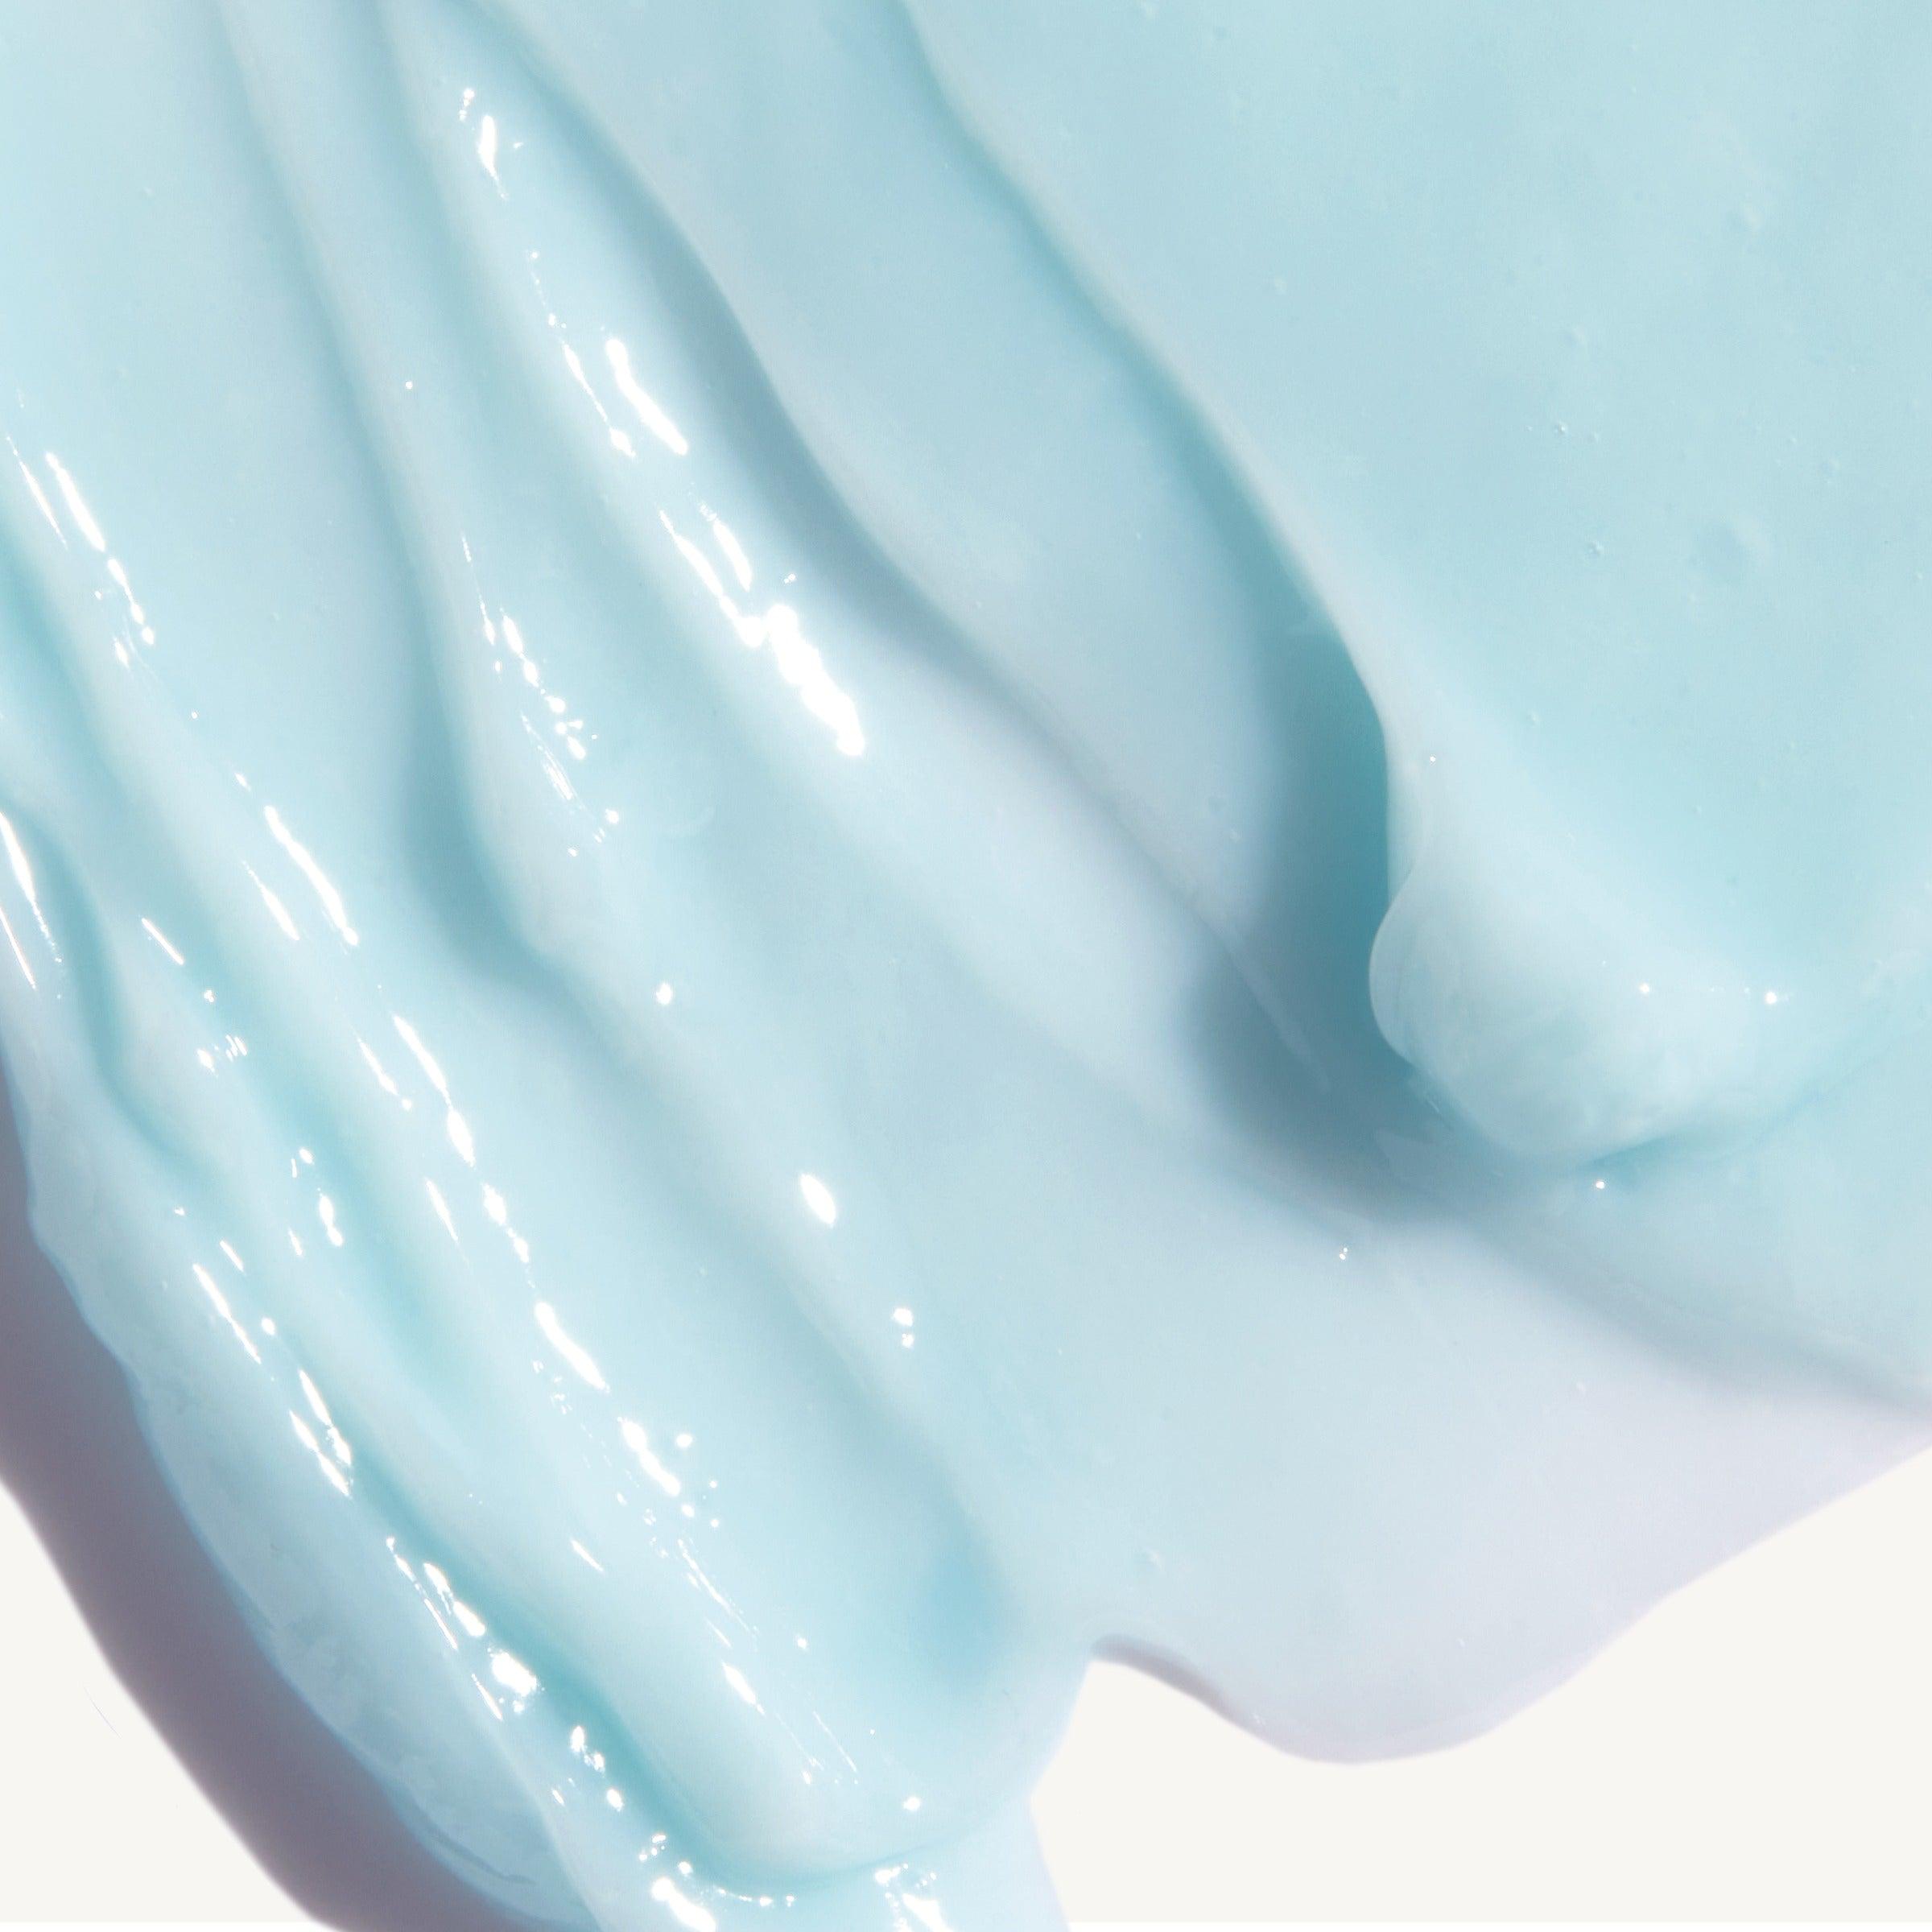 Sarah Chapman Skinesis Digital Rest closeup gel cream texture product swatch